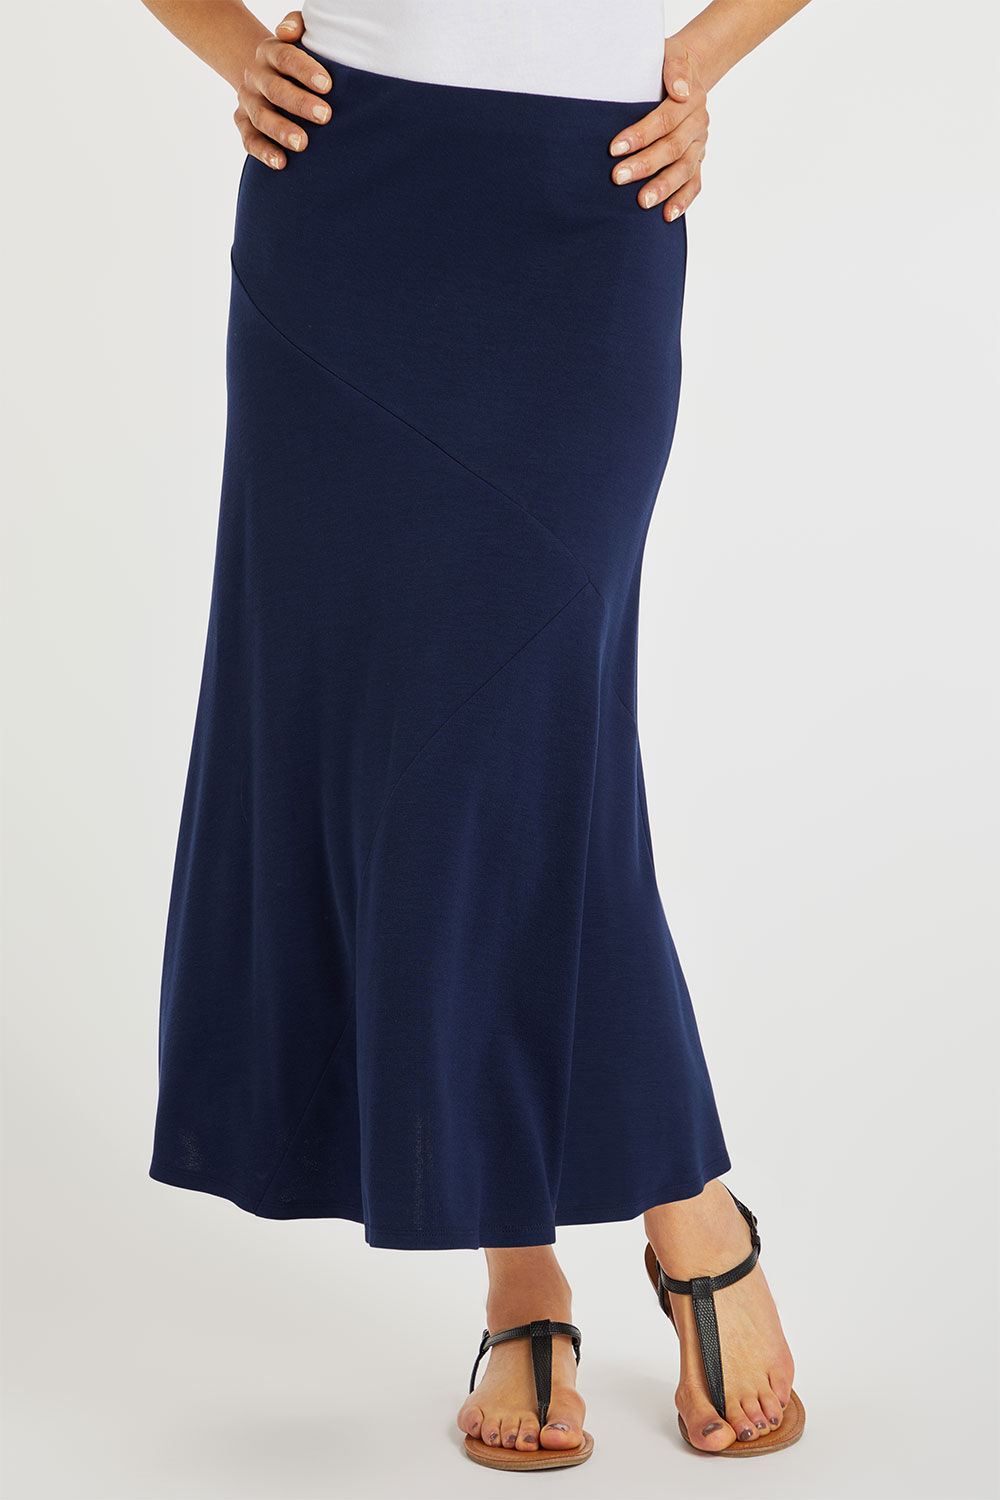 Bonmarche Ladies Navy Blue Viscose Plain Cut And Sew Panelled Skirt, Size: 10 - Summer Dresses